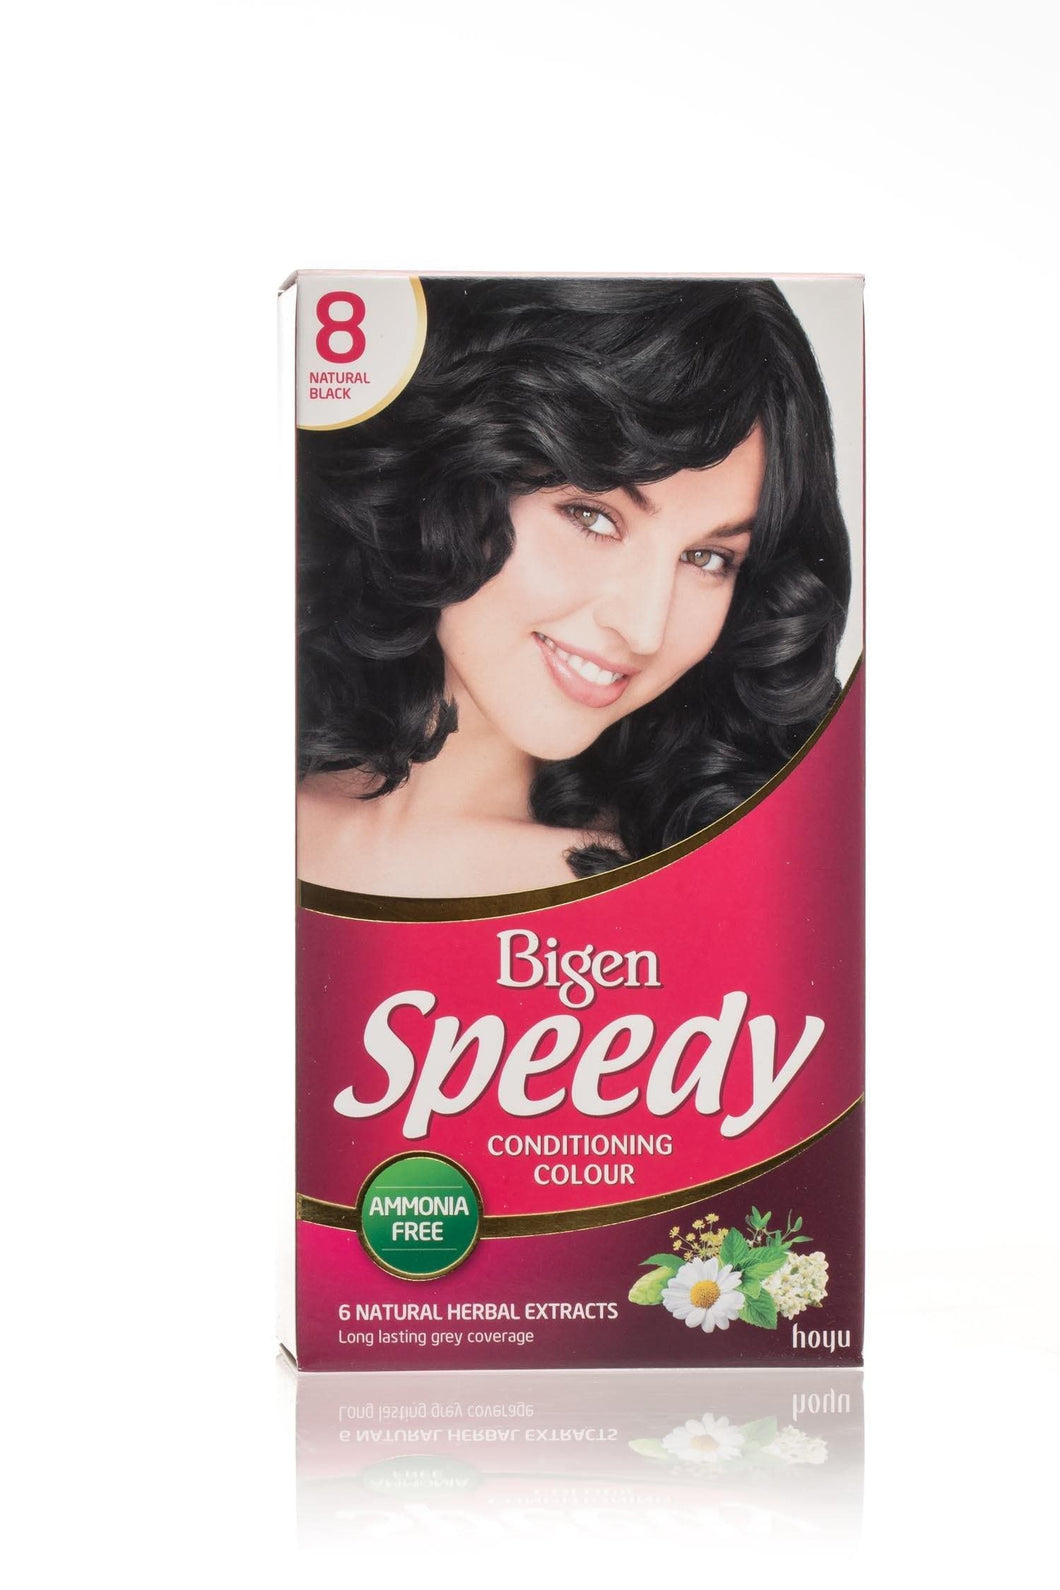 Bigen Women's Speedy Conditioning Colour - 8 - Natural Black - Bigen-shop